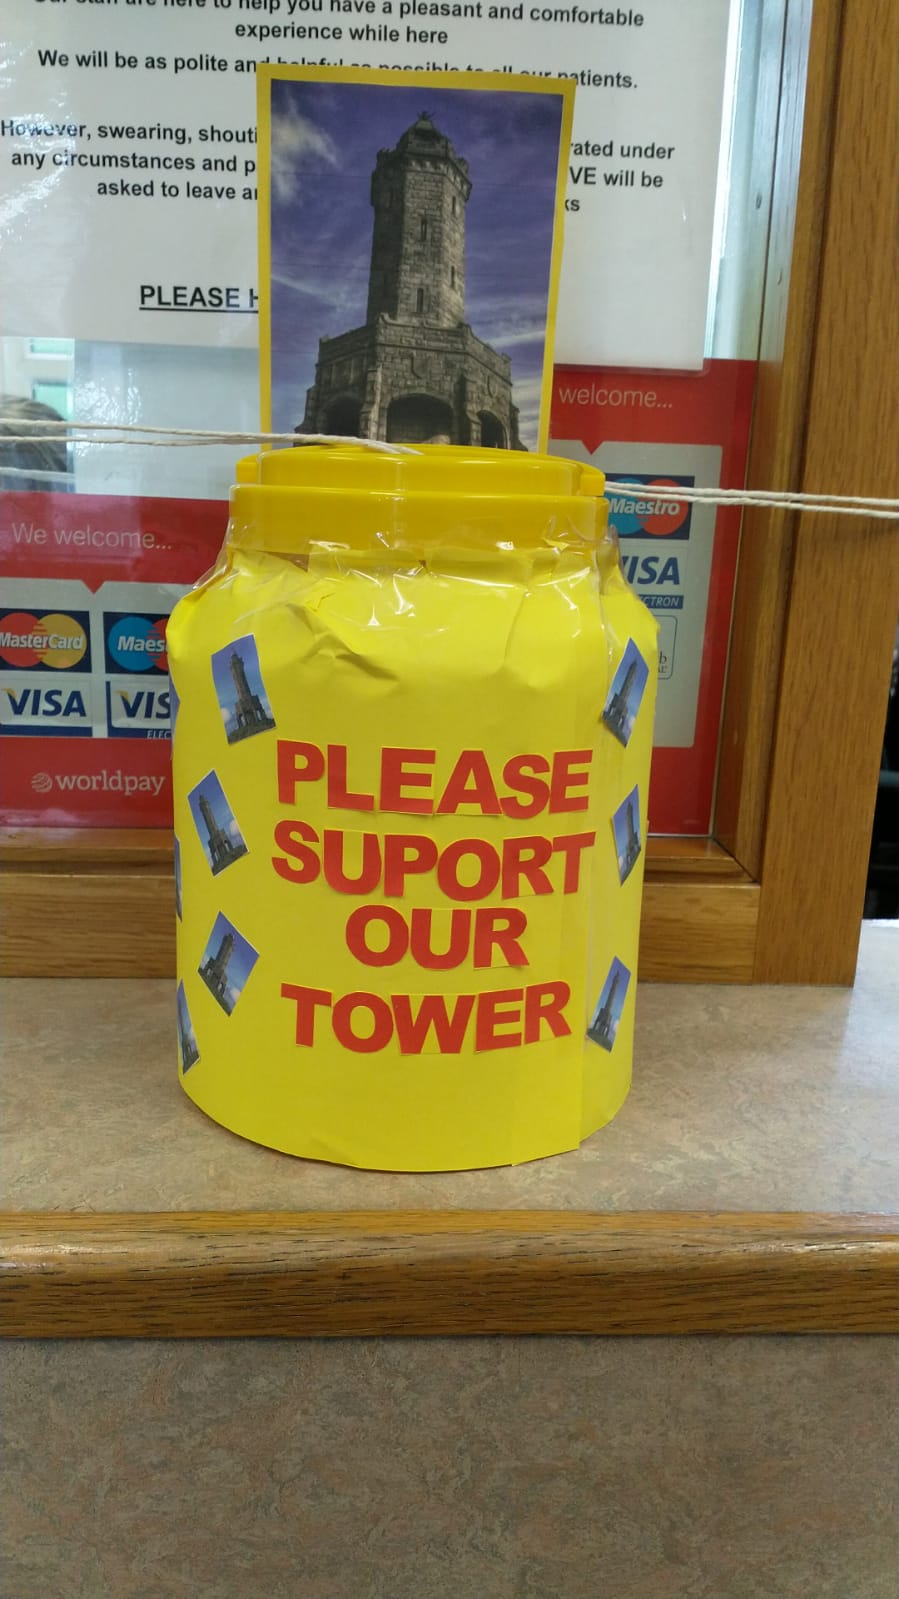 Darwenside Dental Practice donation box for the restoration of Darwen Tower